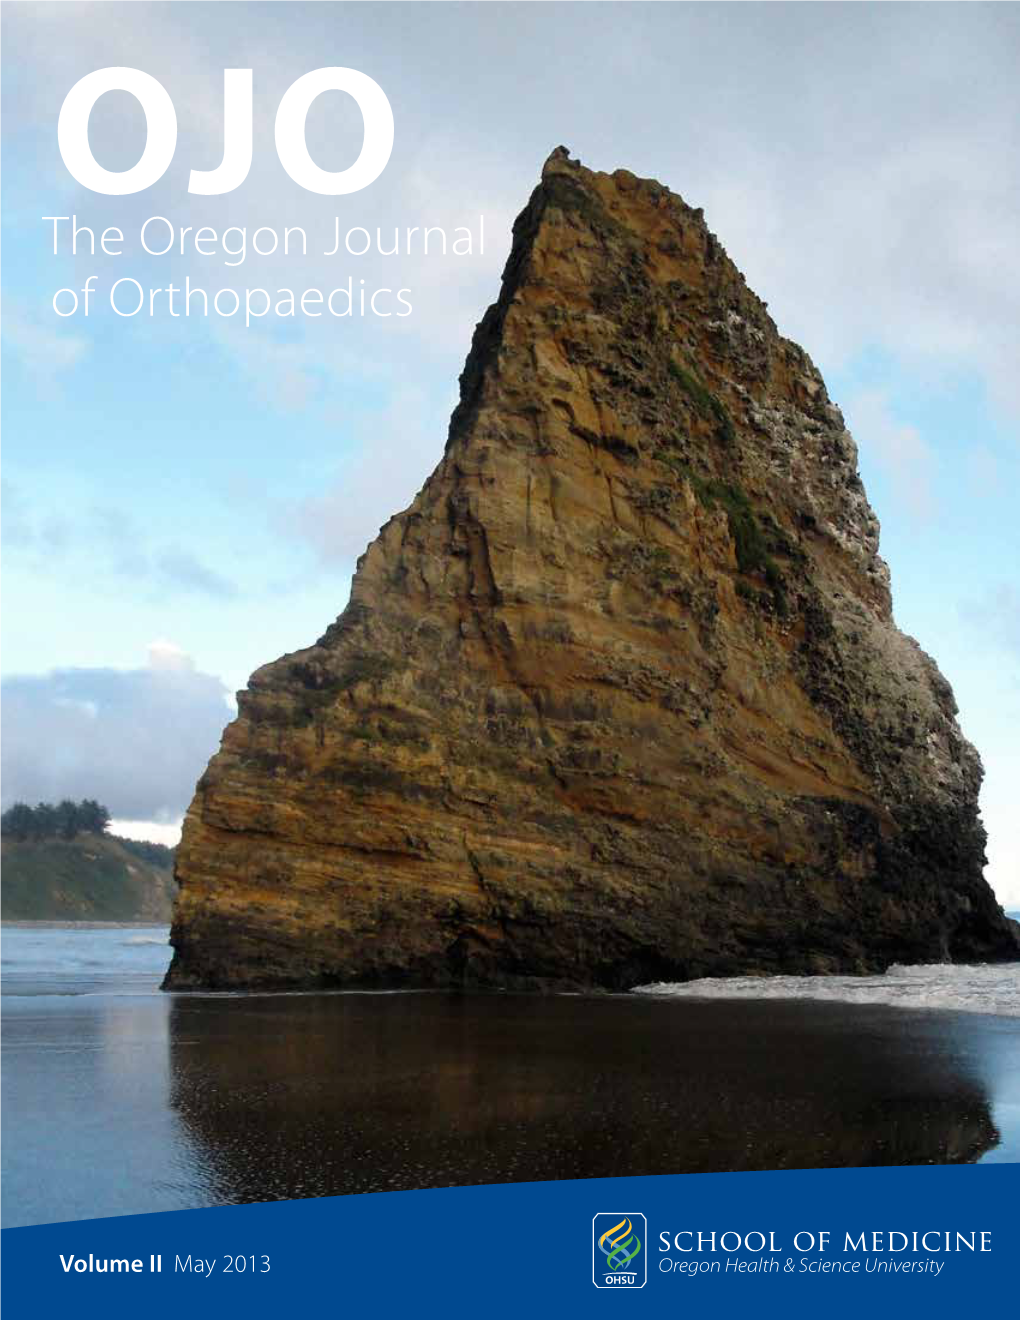 The Oregon Journal of Orthopaedics